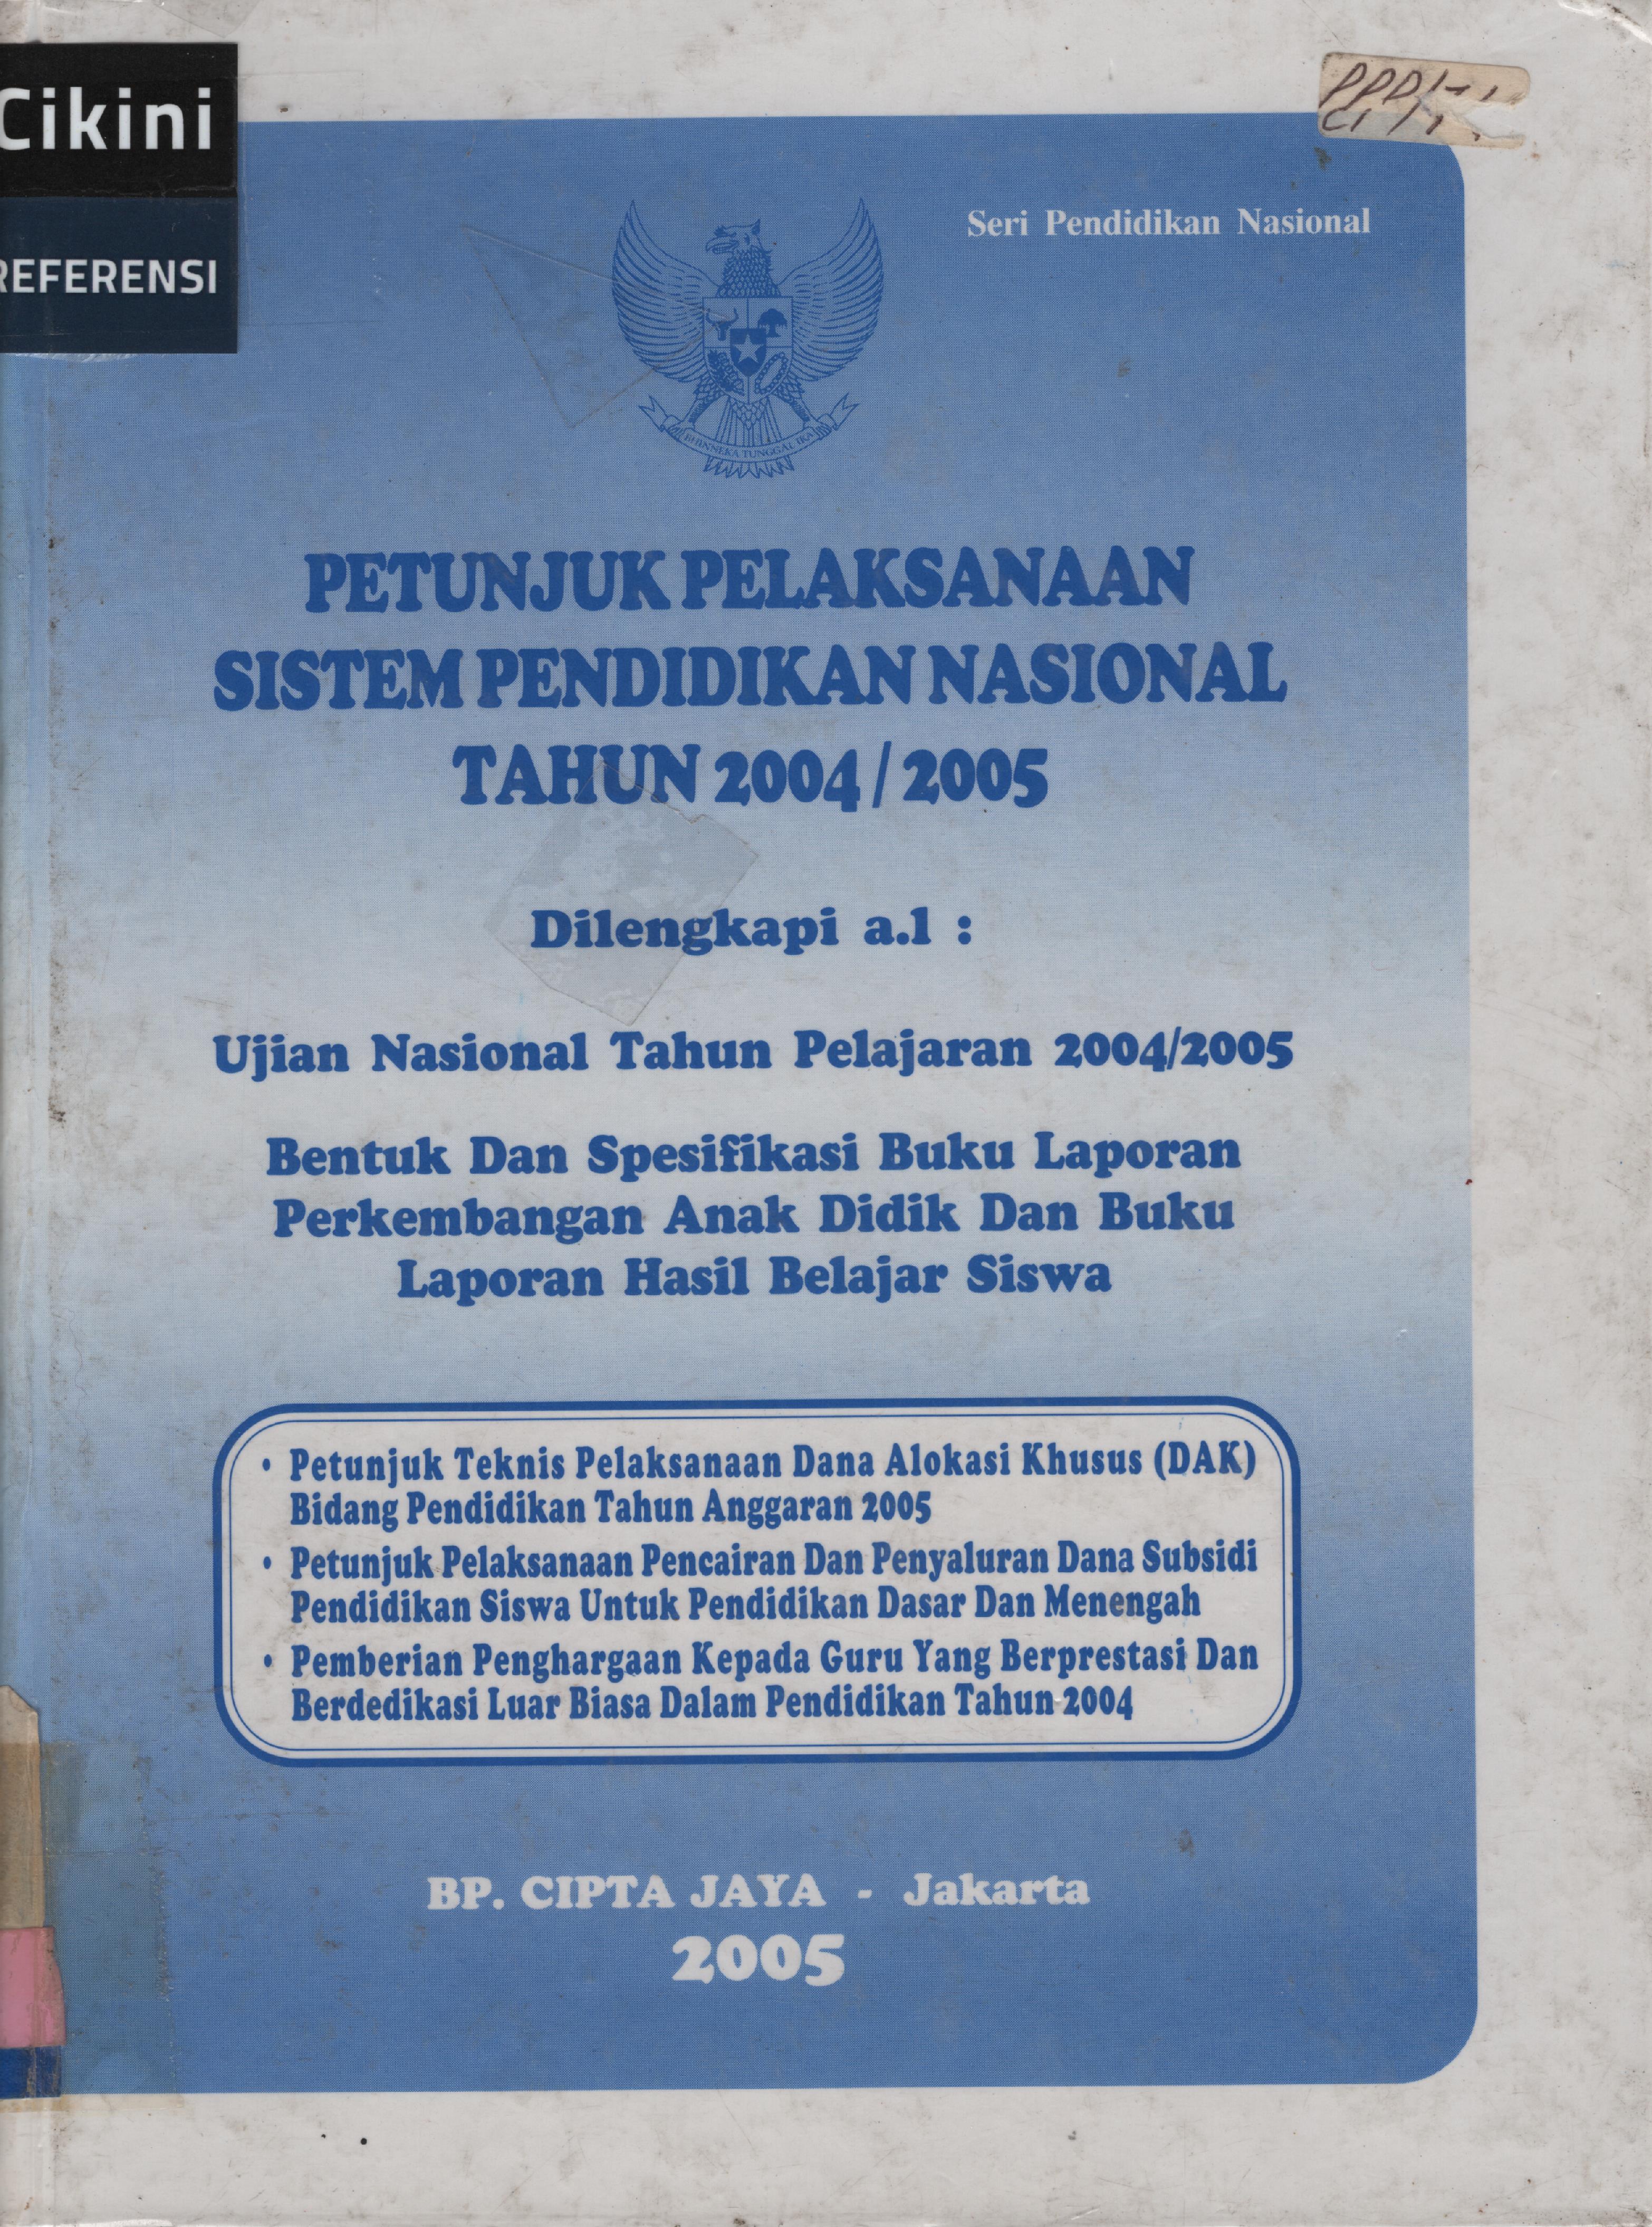 Petunjuk pelaksanaan sistem pendidikan nasional tahun 2004/2005